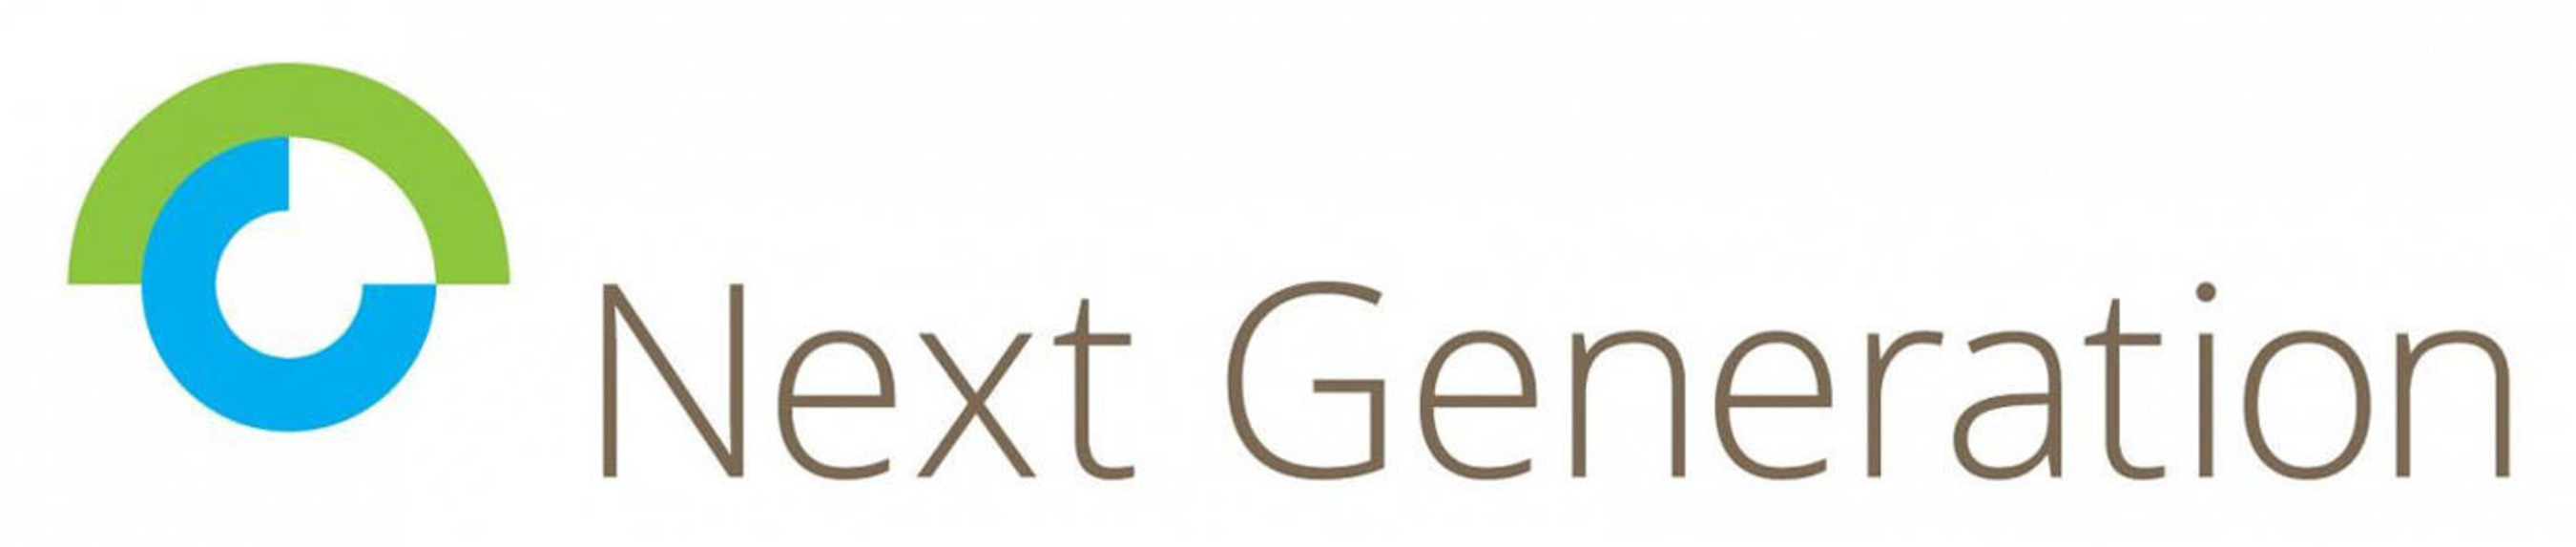 Next Generation Logo. (PRNewsFoto/Univision) (PRNewsFoto/UNIVISION)